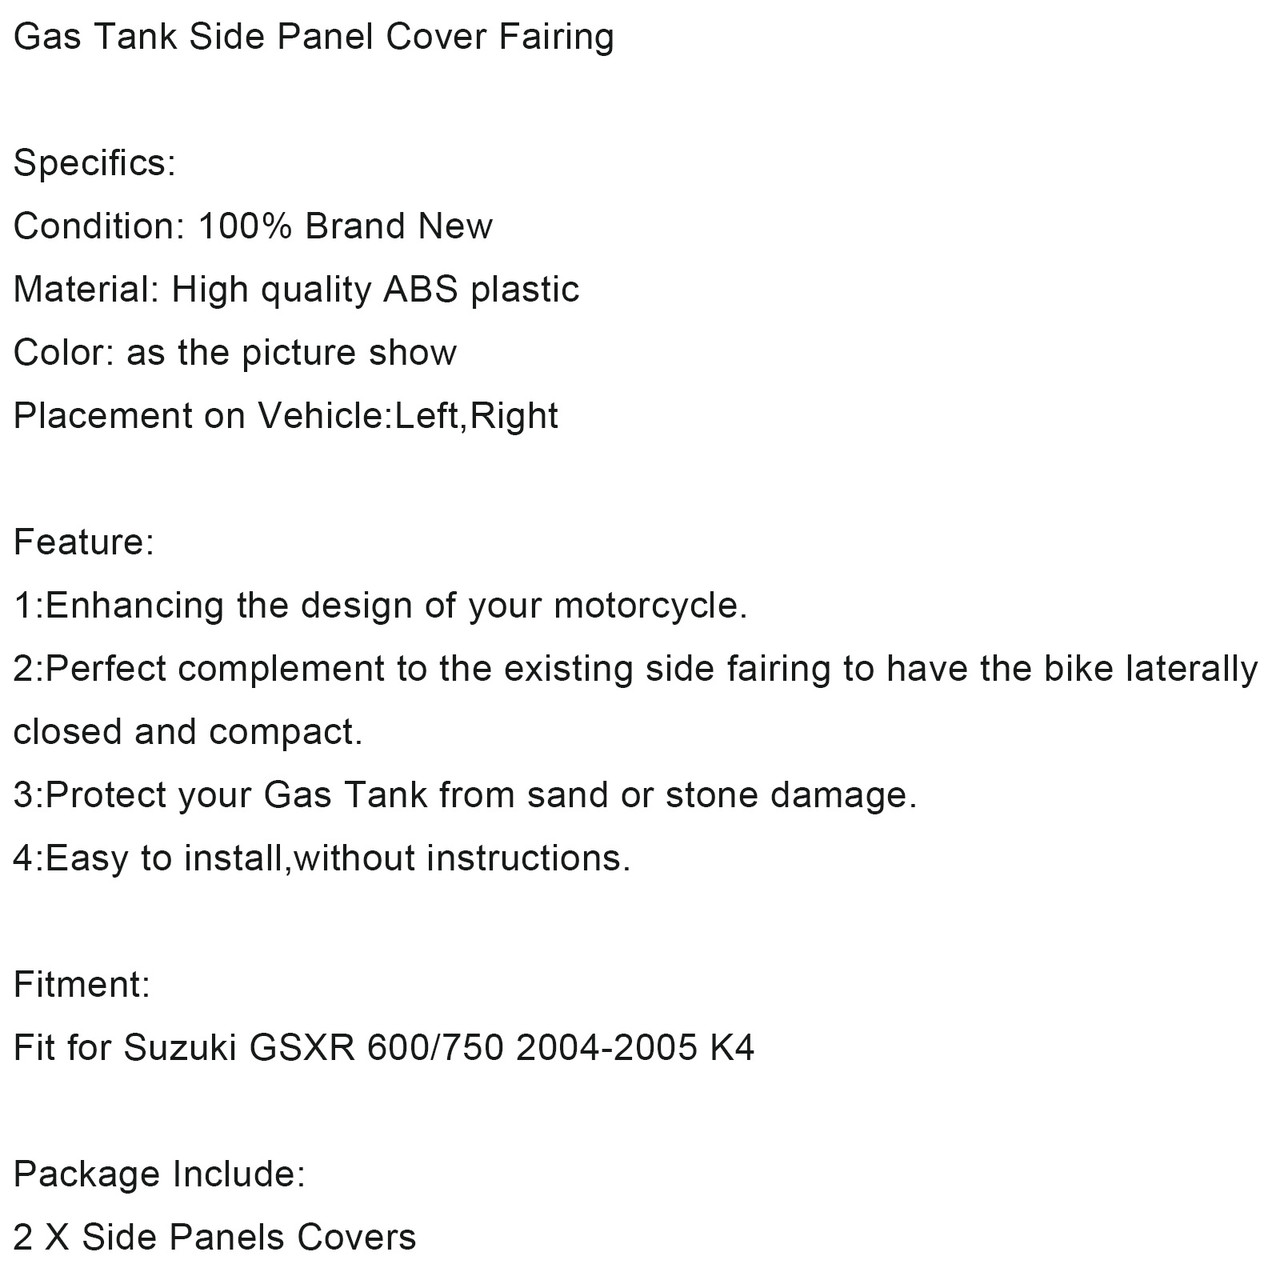 Gas Tank Side Panel Cover Fairing Fit for Suzuki GSXR 600/750 2004-2005 K4 BLK